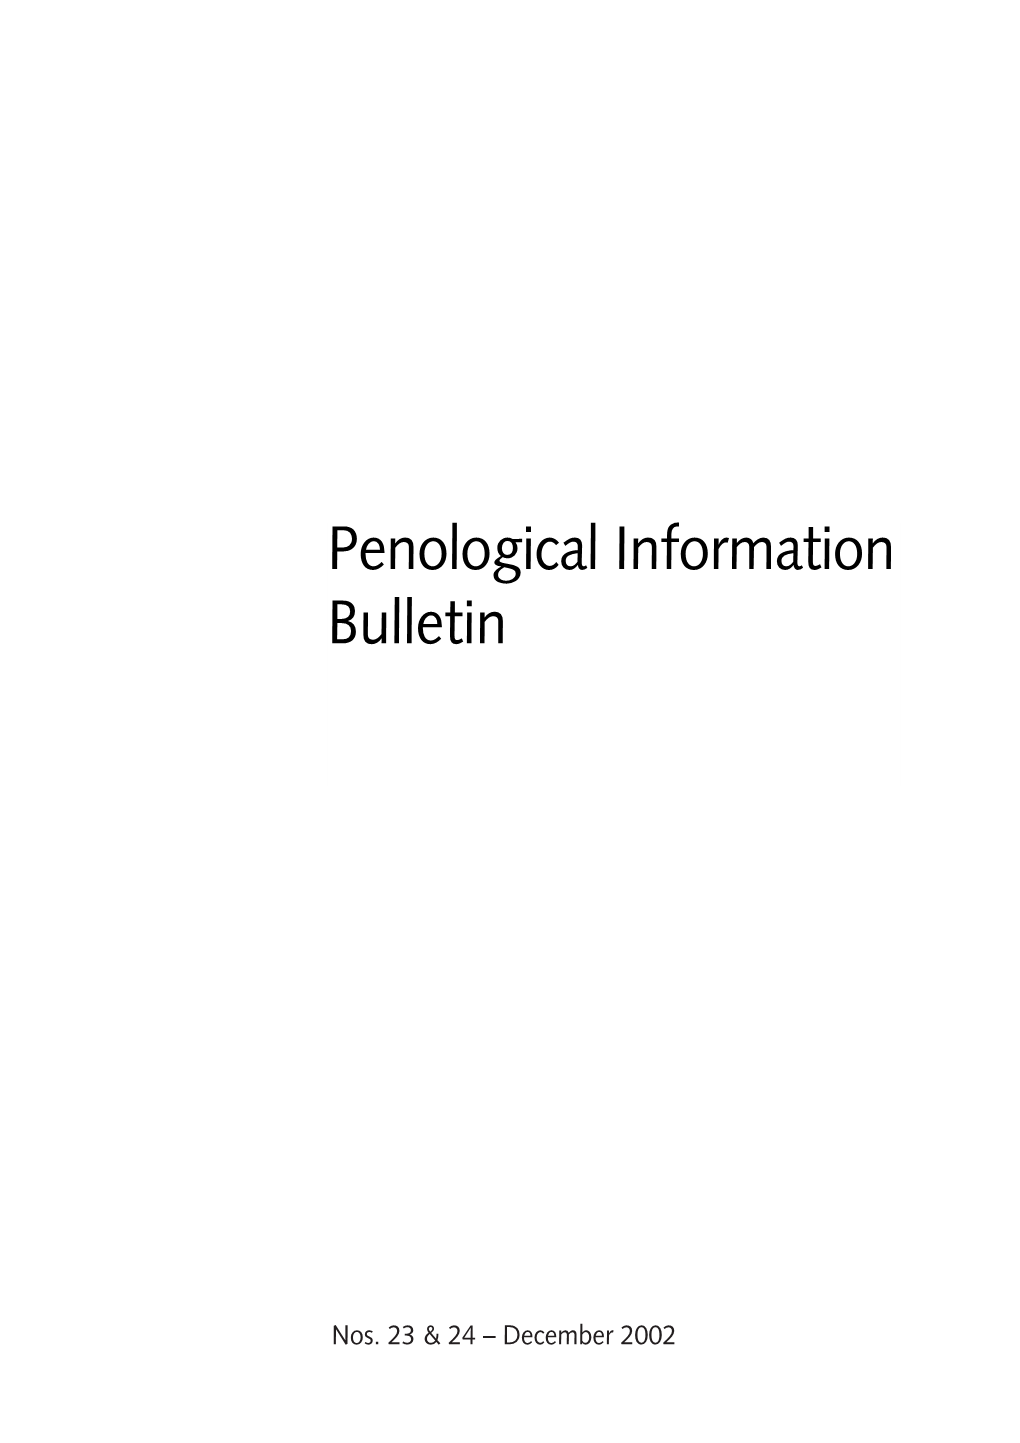 Penological Information Bulletin